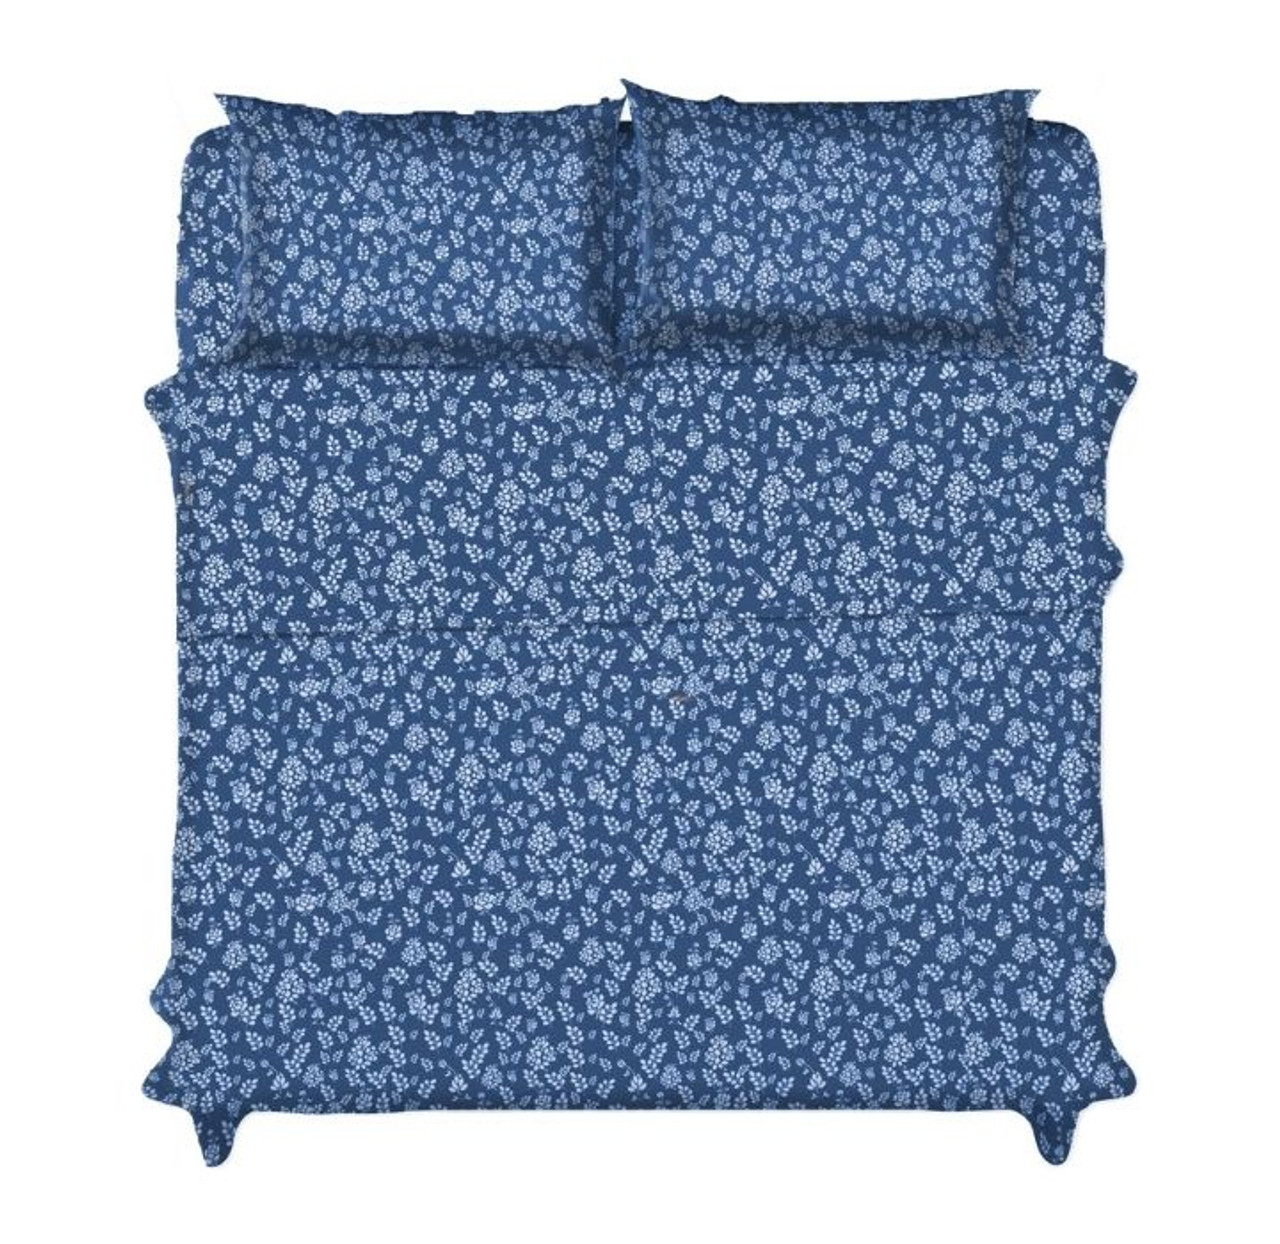 4-Piece Microfiber Floral Sheet Set, Deep Pocket, Ultra-Soft Bedding product image